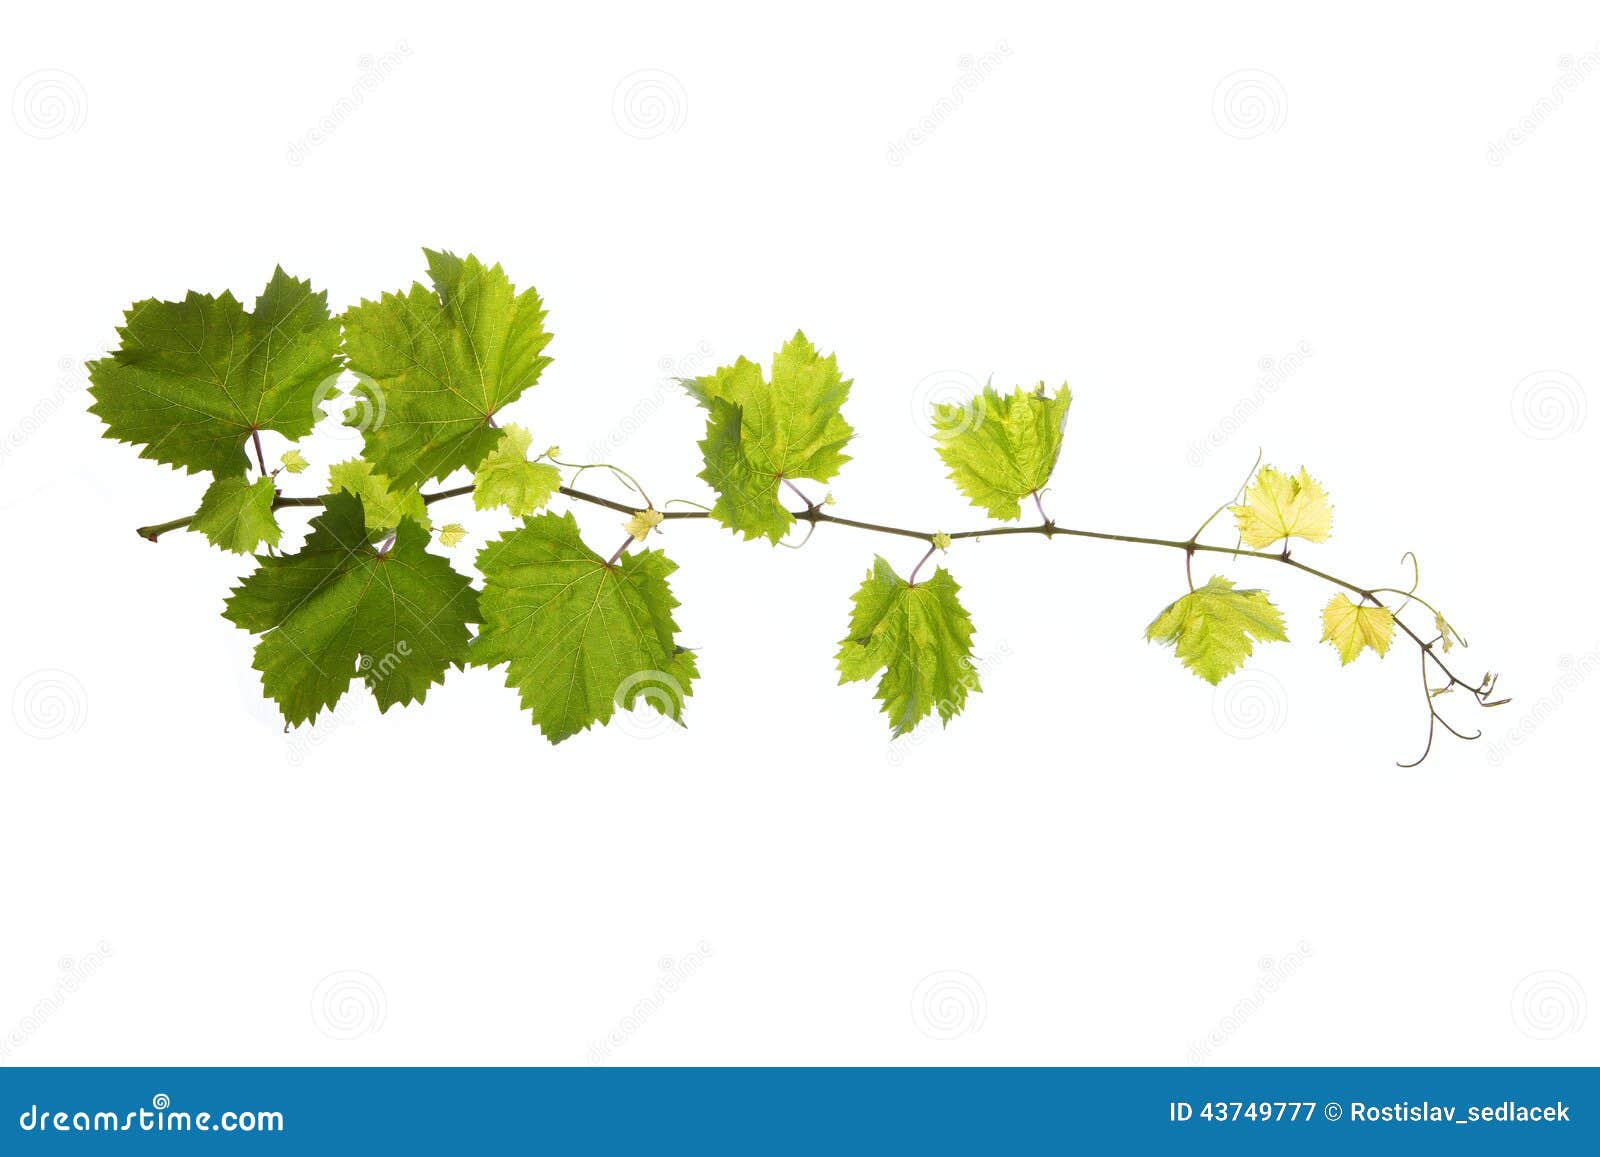 Vine Leaves Isolated On White Stock Photo - Image: 43749777